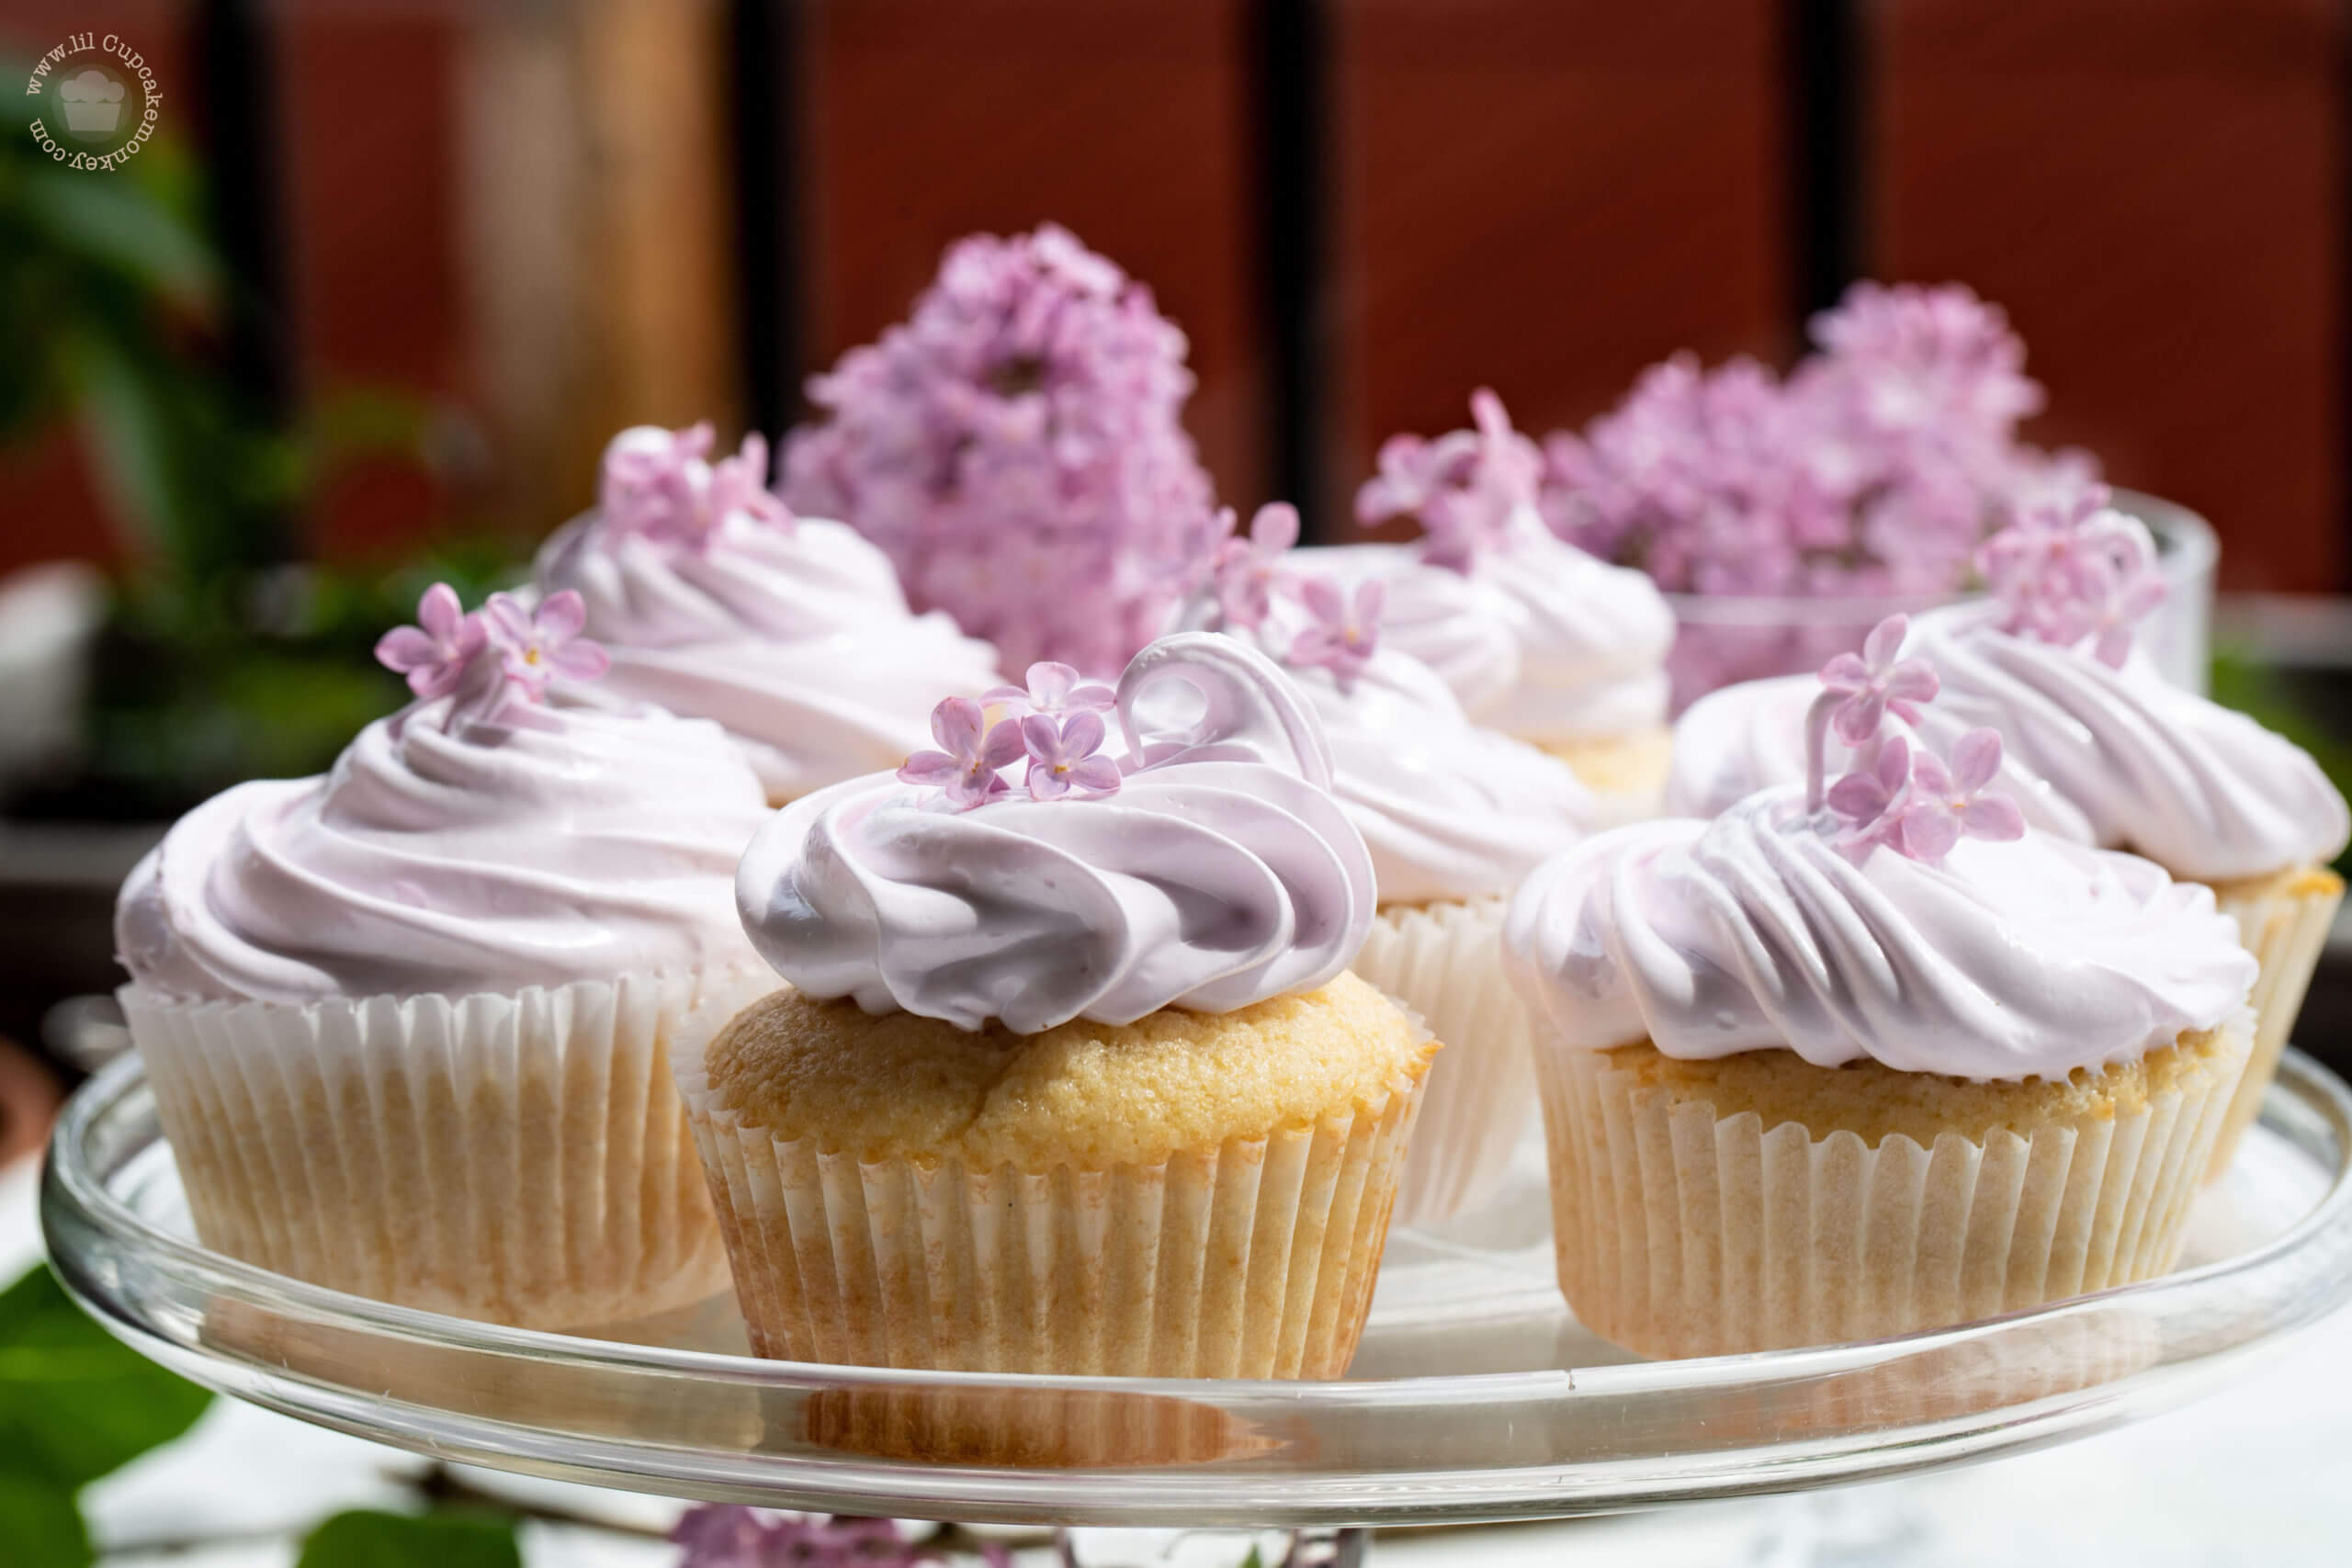 Lilac and Lemon Cupcakes (Photo: Lil Cupcake Monkey)